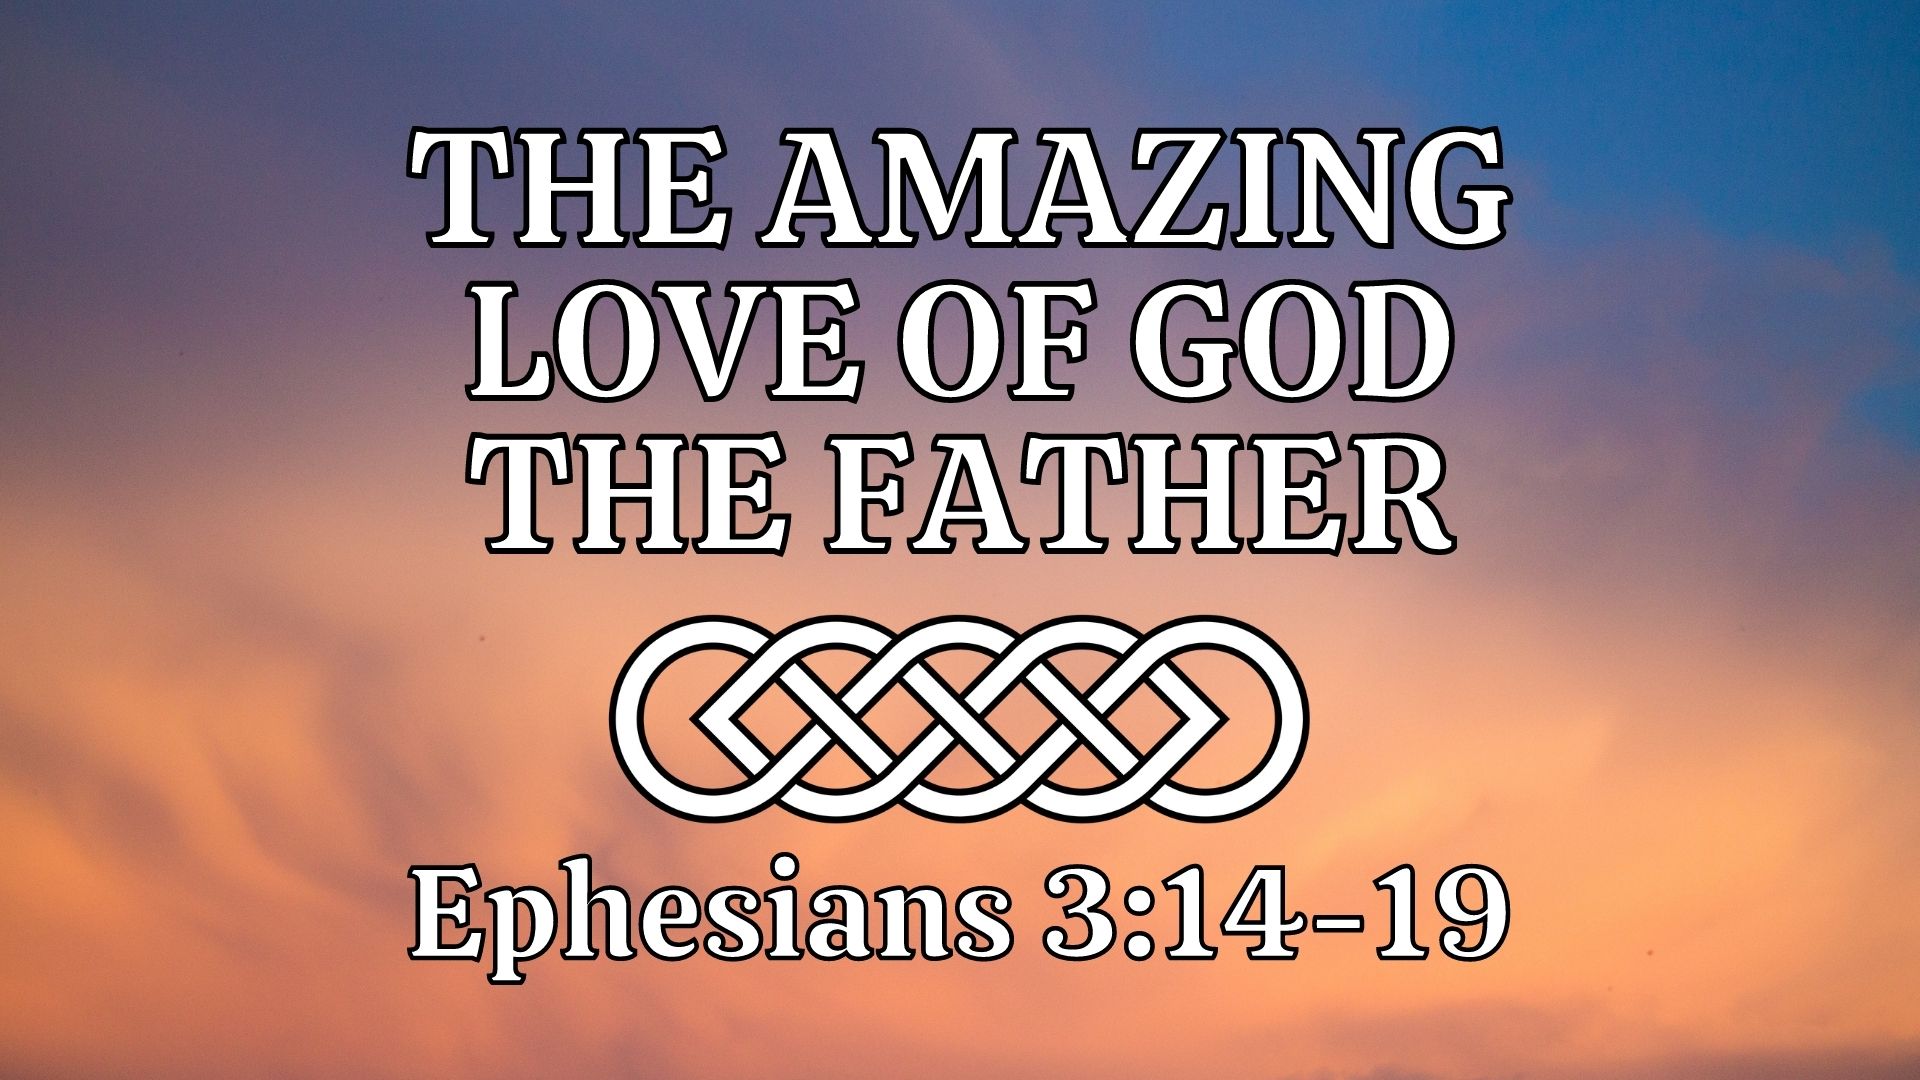 The Amazing Love of God the Father (Ephesians 3:14-19) Image